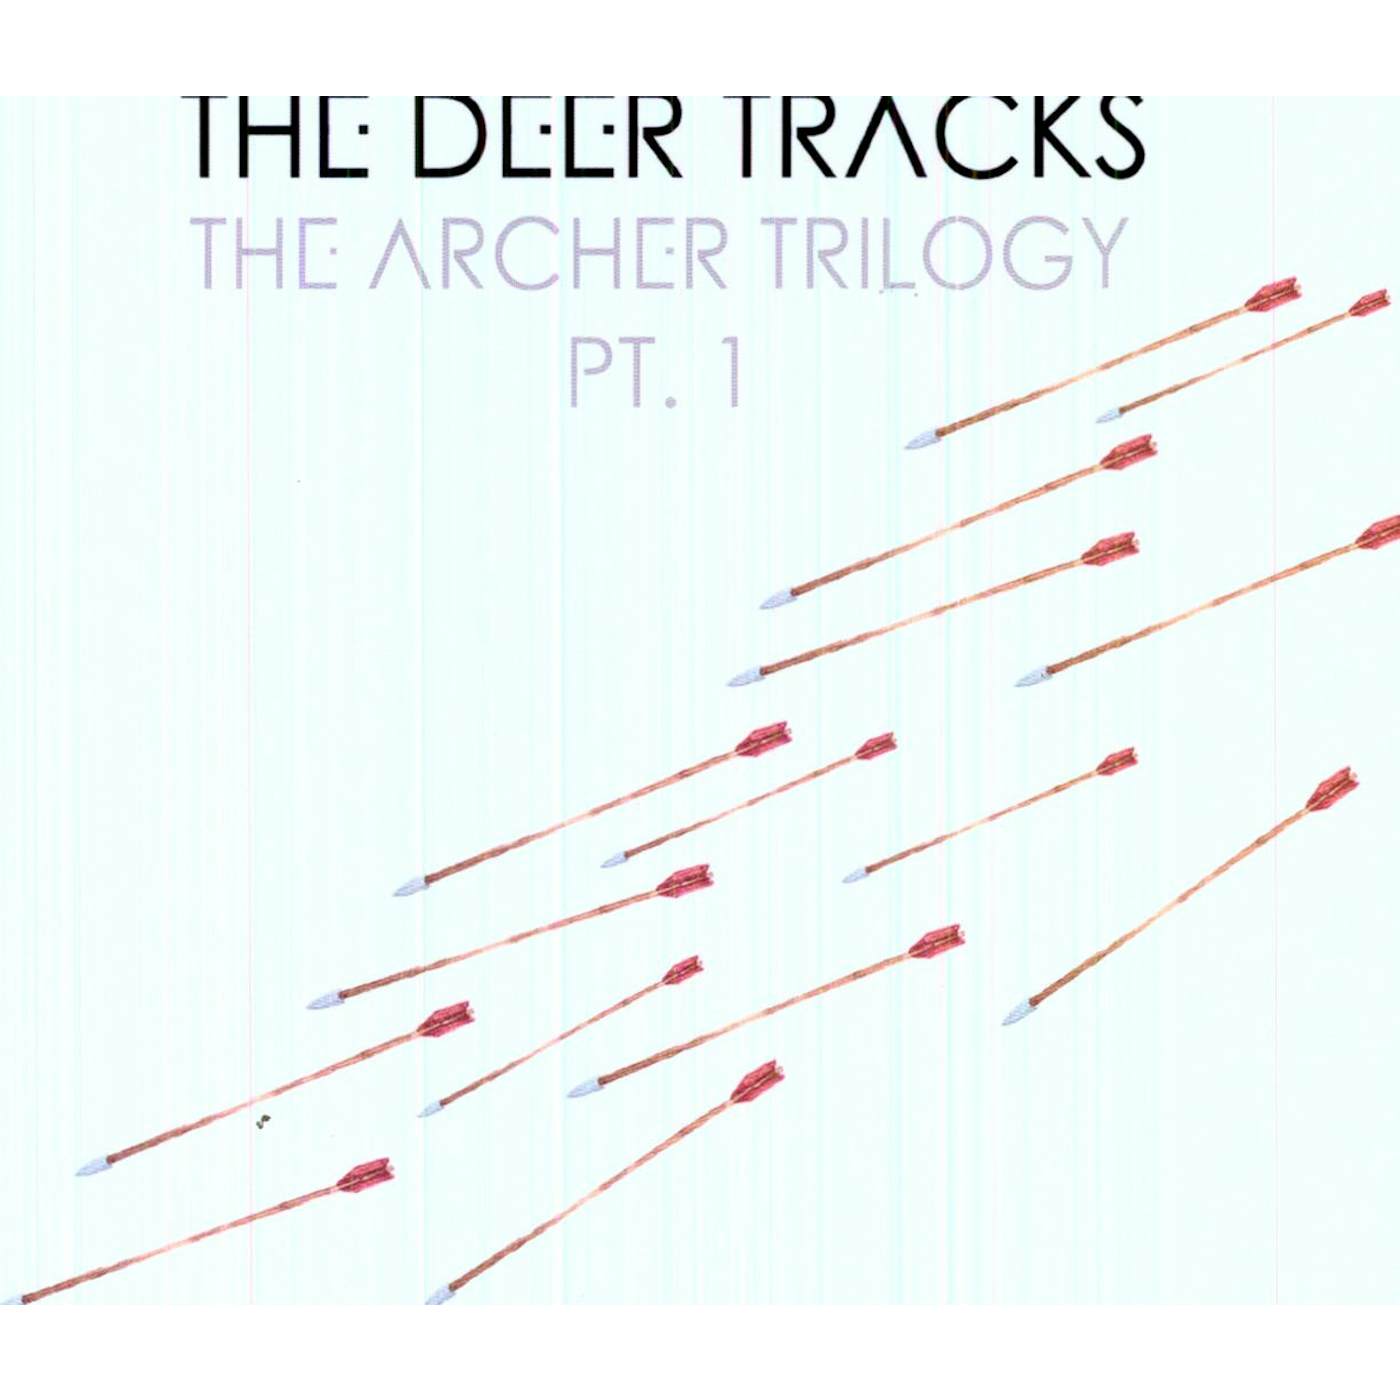 The Deer Tracks ARCHER TRILOGY 1 Vinyl Record